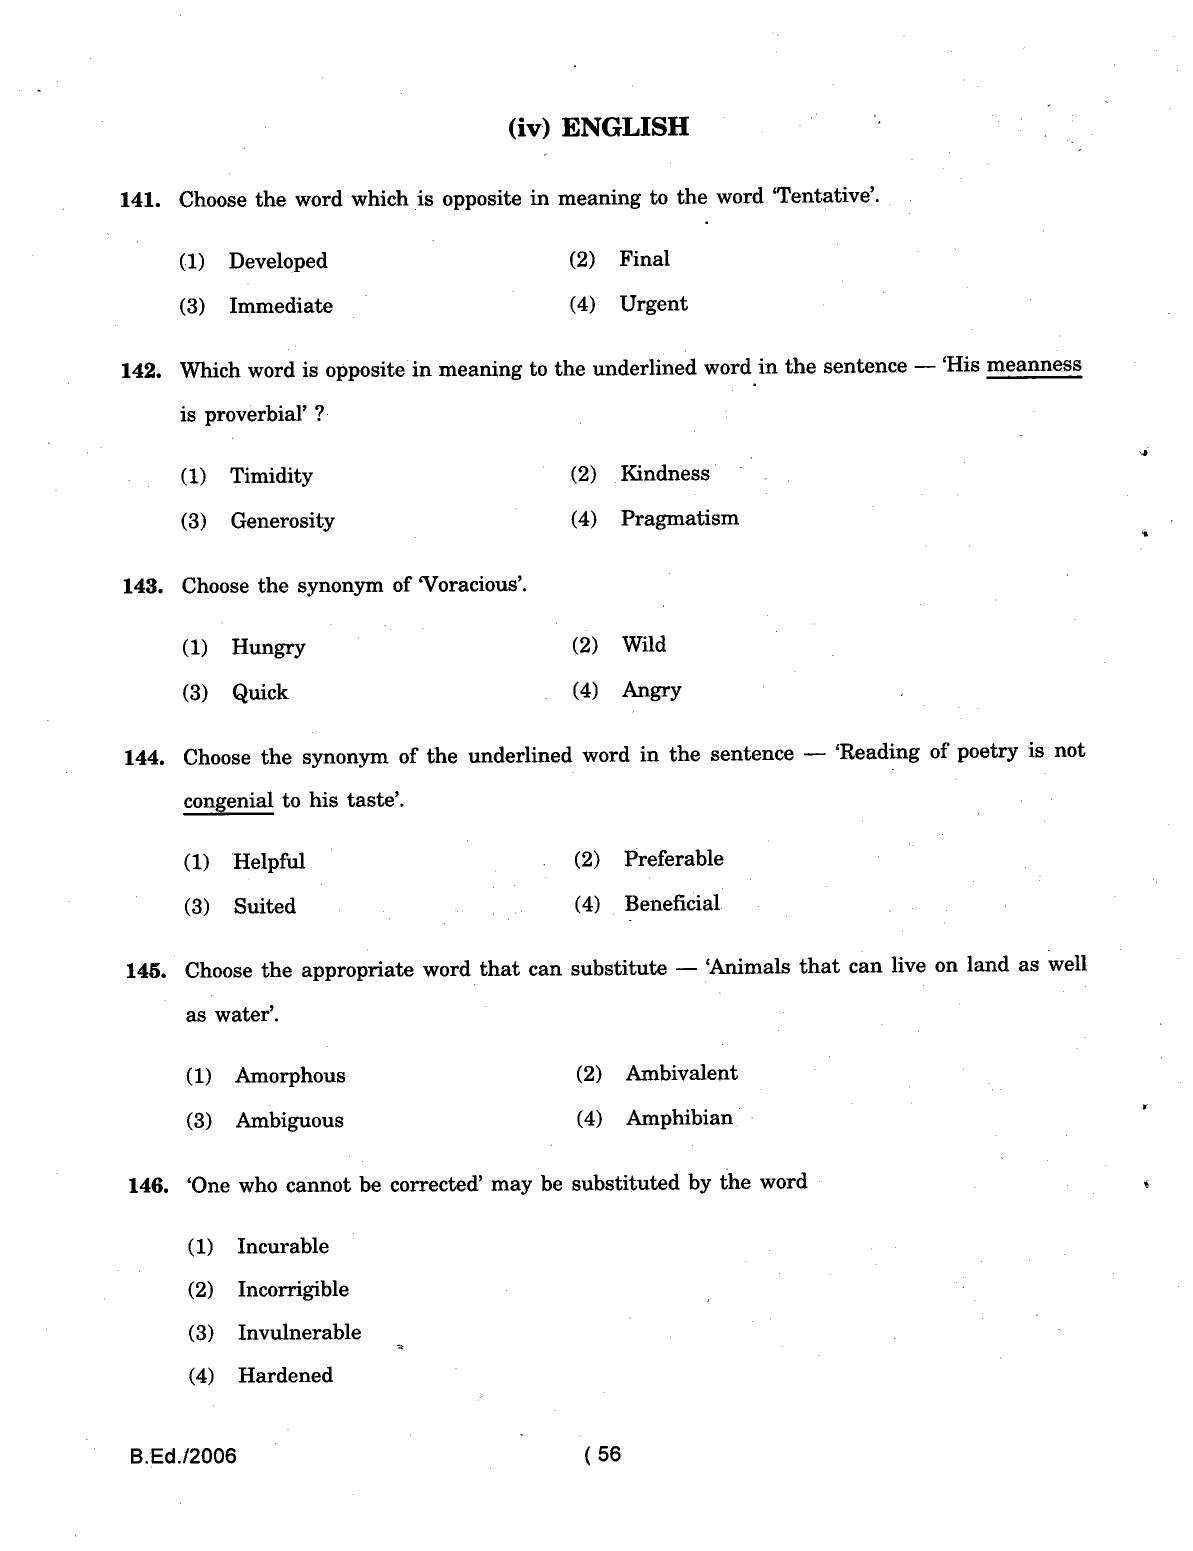 IGNOU B.Ed 2006 Question Paper - Page 56